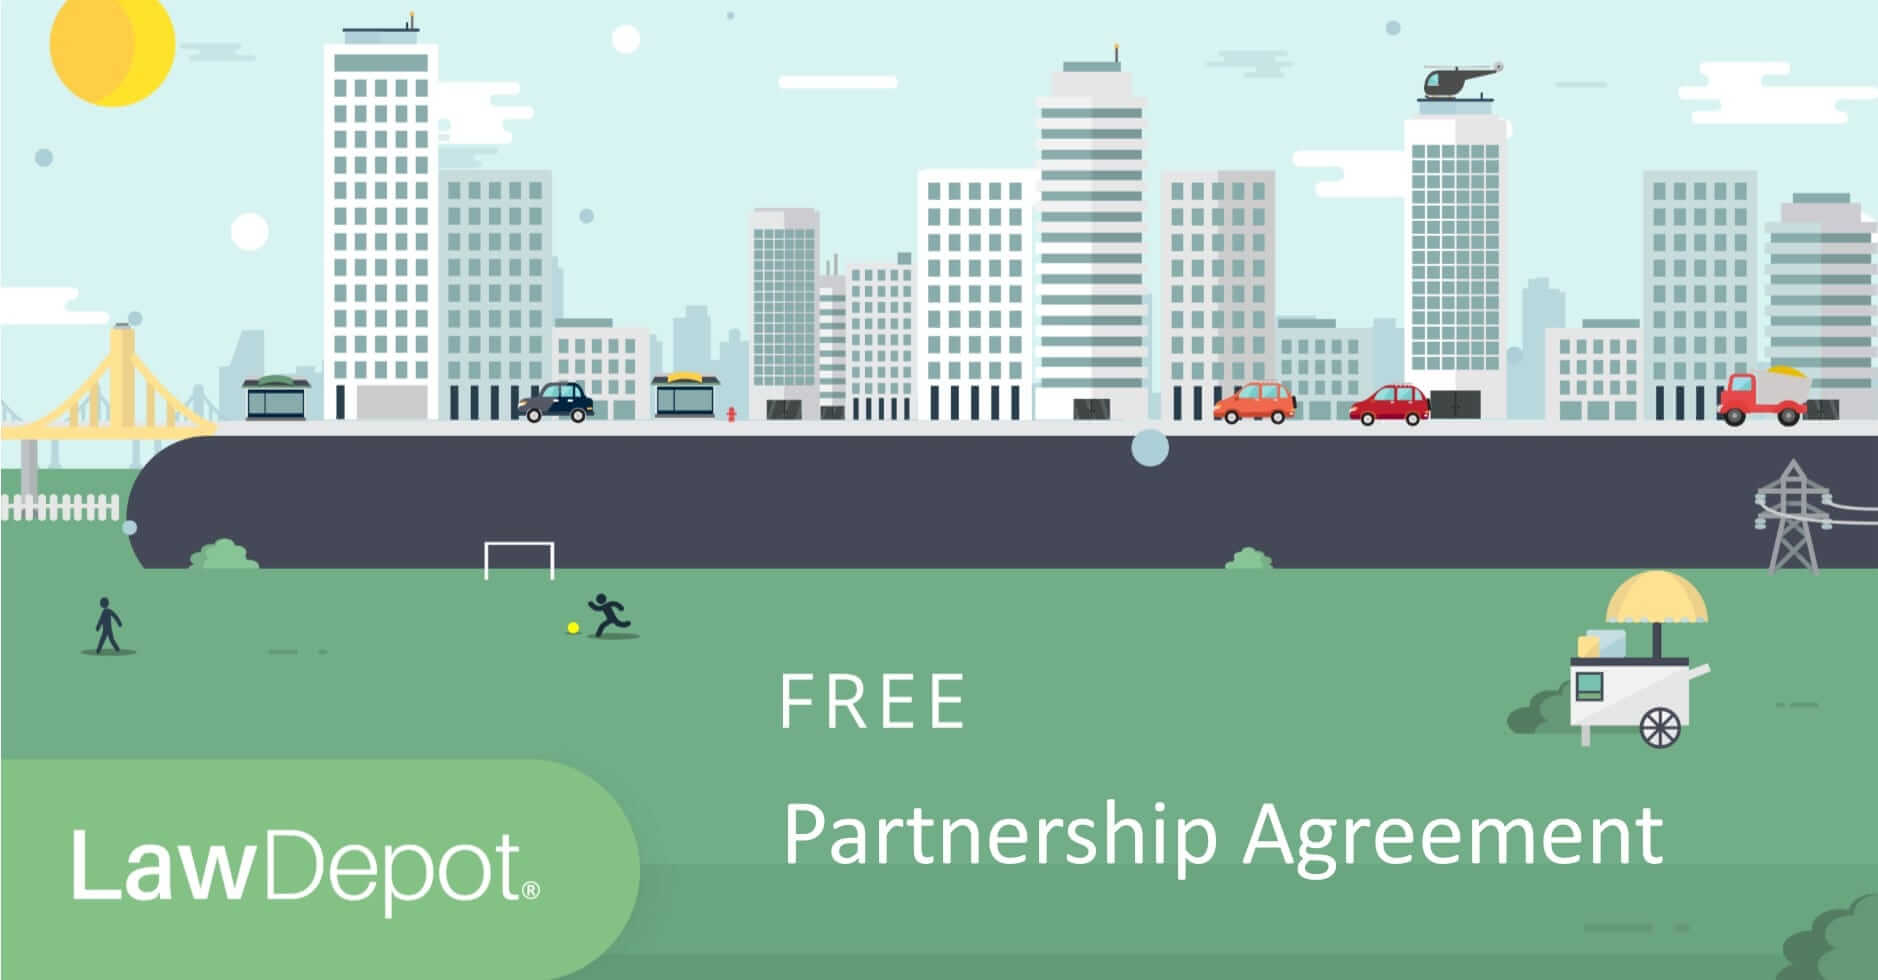 Partnership Agreement Pdf Download Free Partnership Agreement Create Download And Print Lawdepot Us